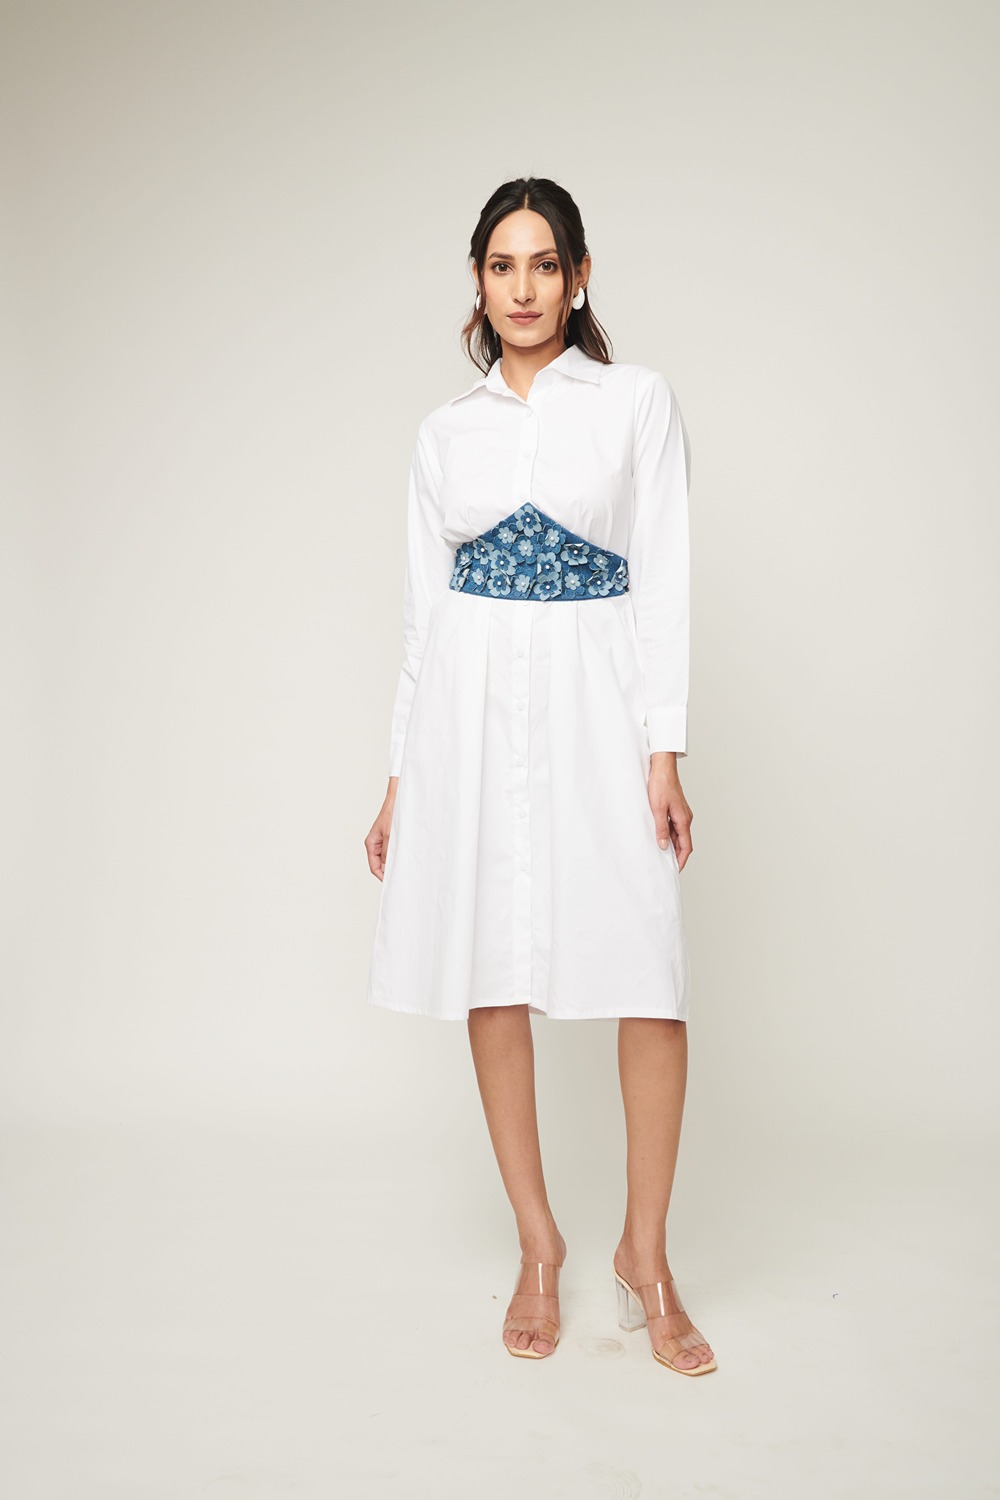 Weaving Cult White Shirt Dress With Denim Flower Belt